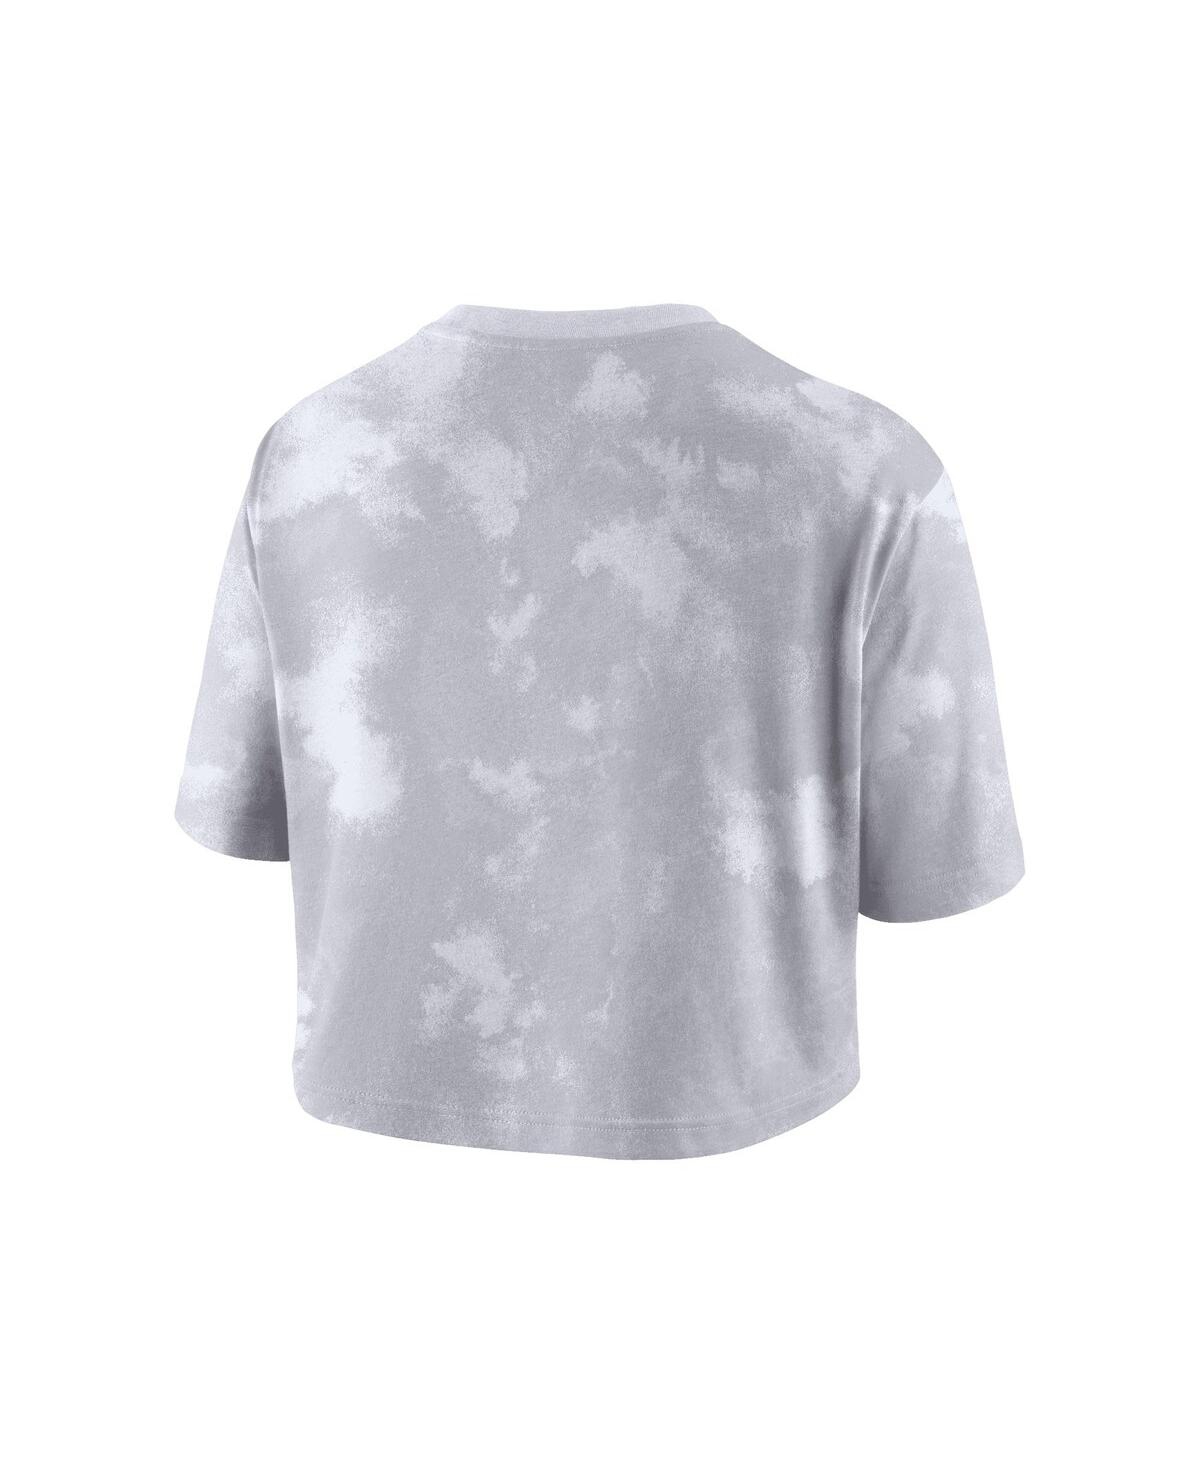 Shop Nike Women's  White Texas Longhorns Tie-dye Cropped T-shirt